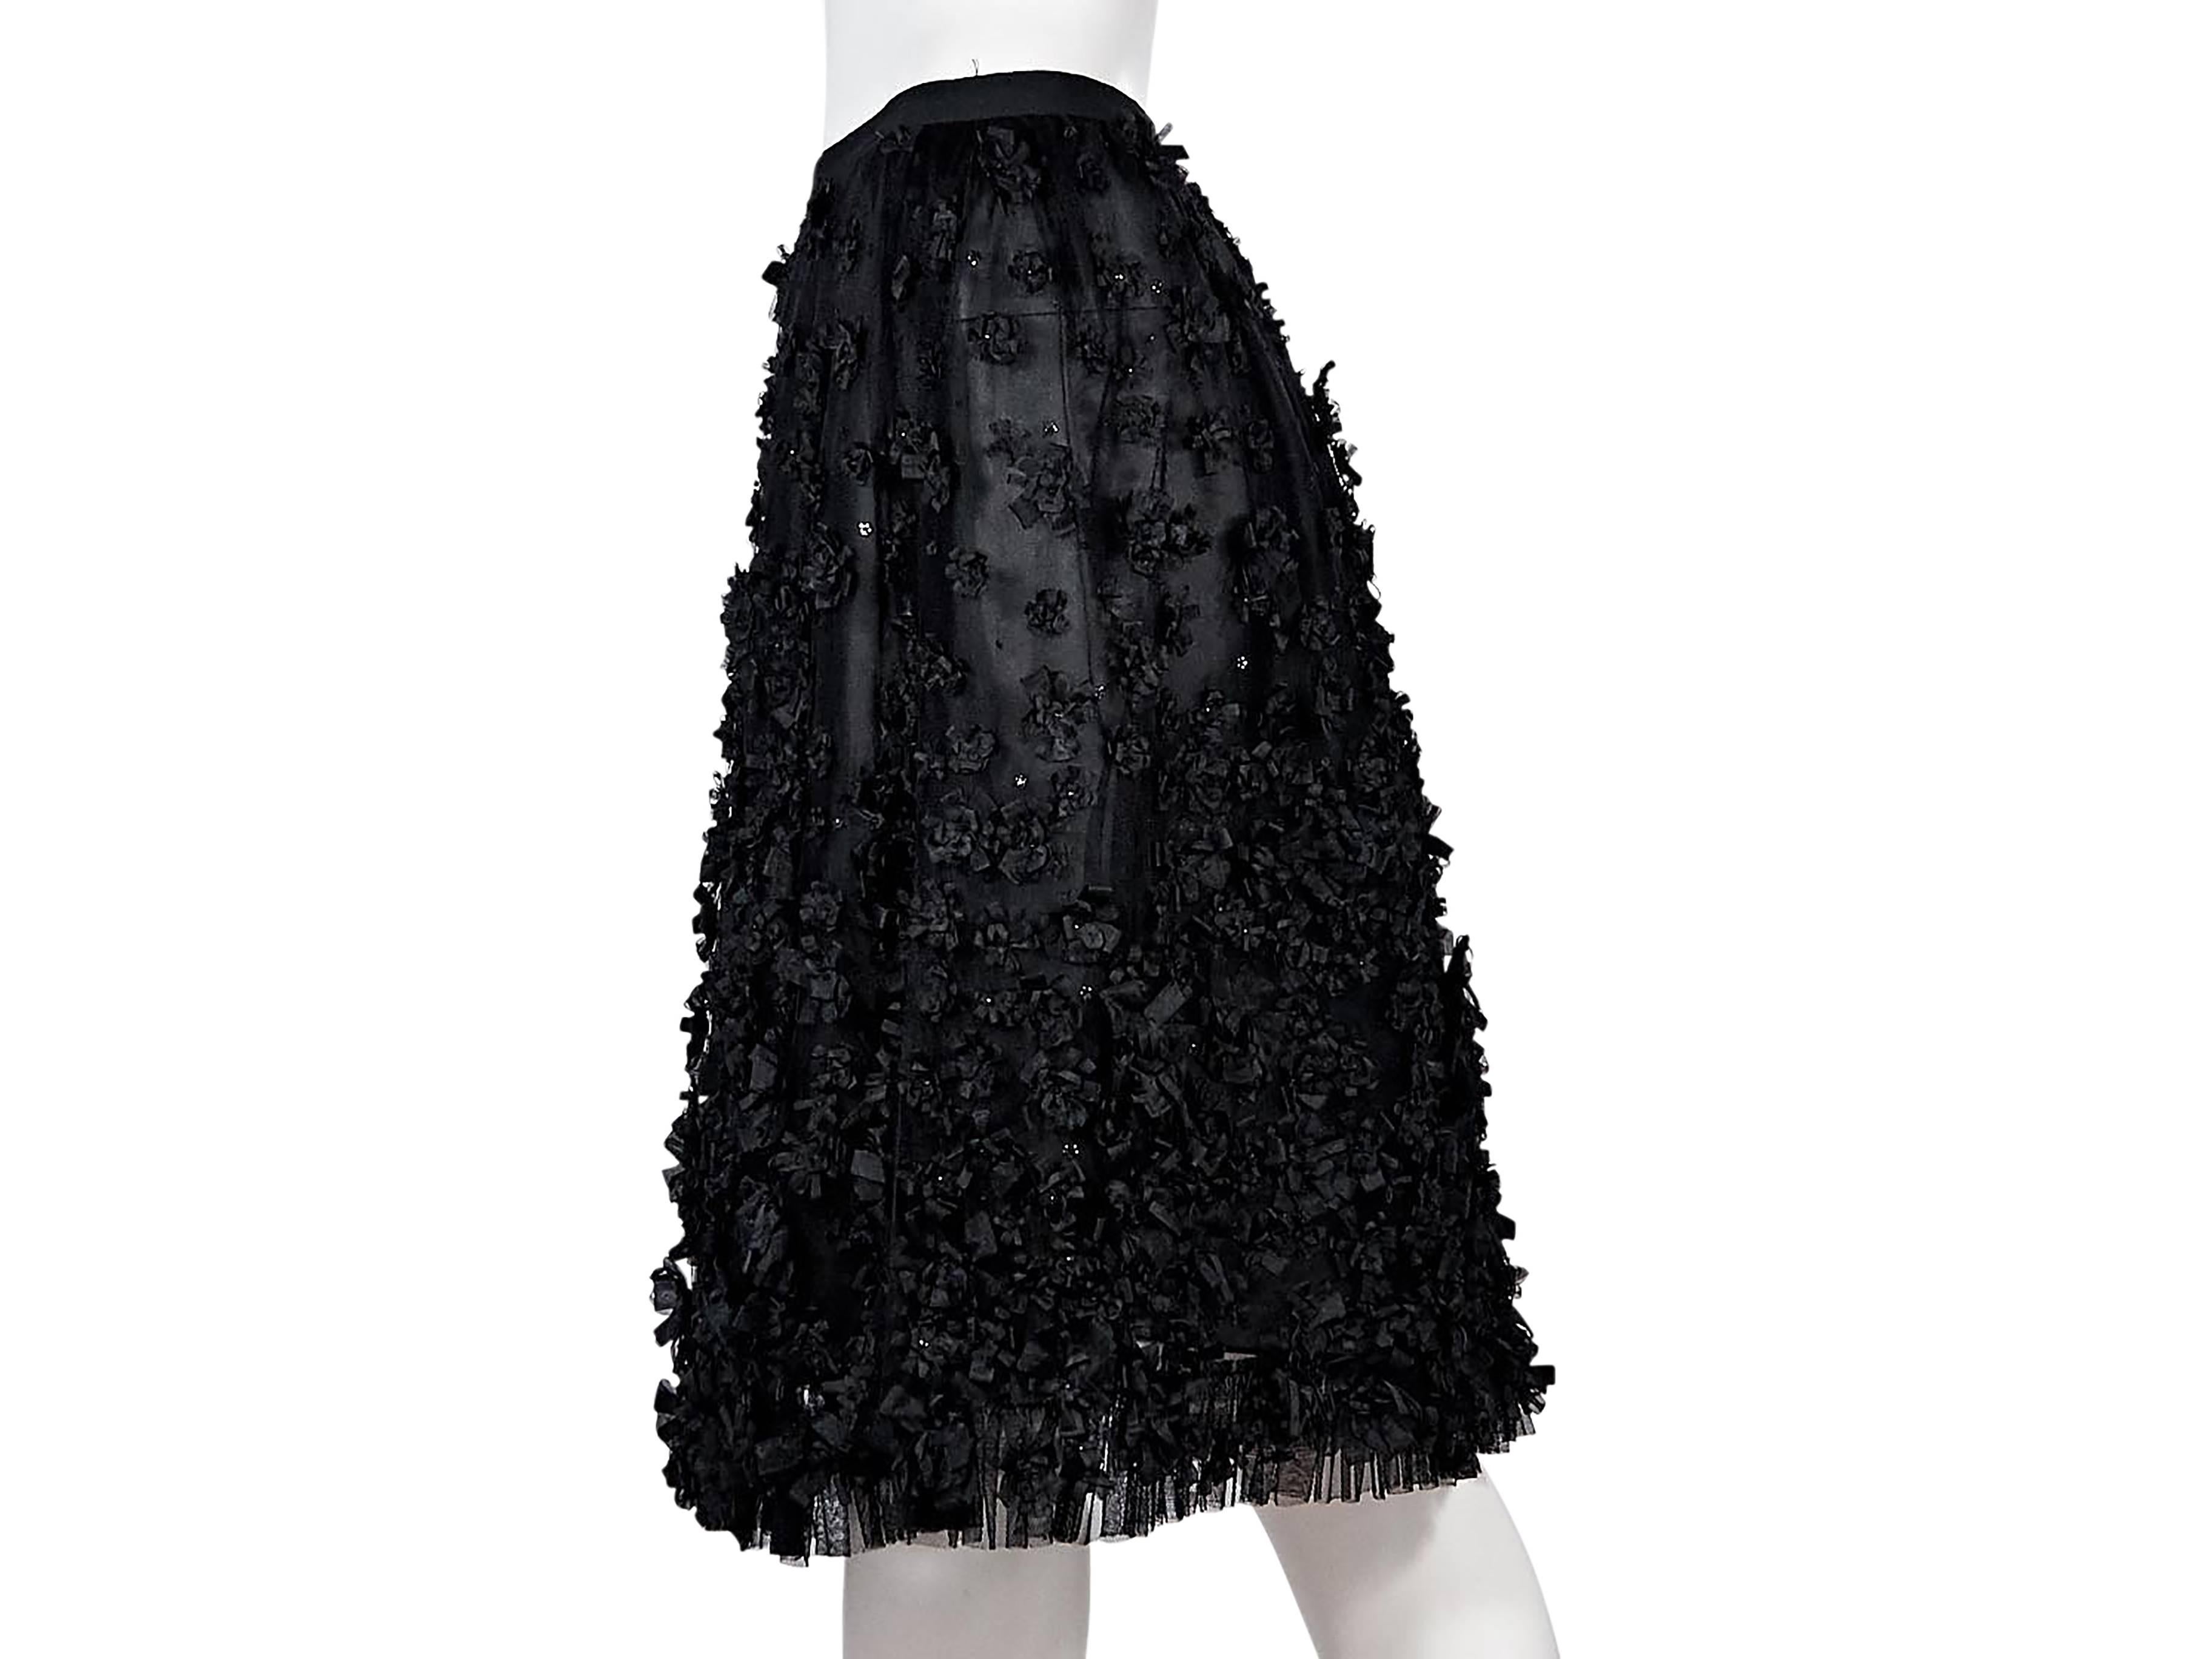 Product details:  Black applique knee-length skirt by Oscar de la Renta.  Banded waist.  Side zip closure.   
Condition: Pre-owned. Very good.

Est. Retail $ 1,600.00

